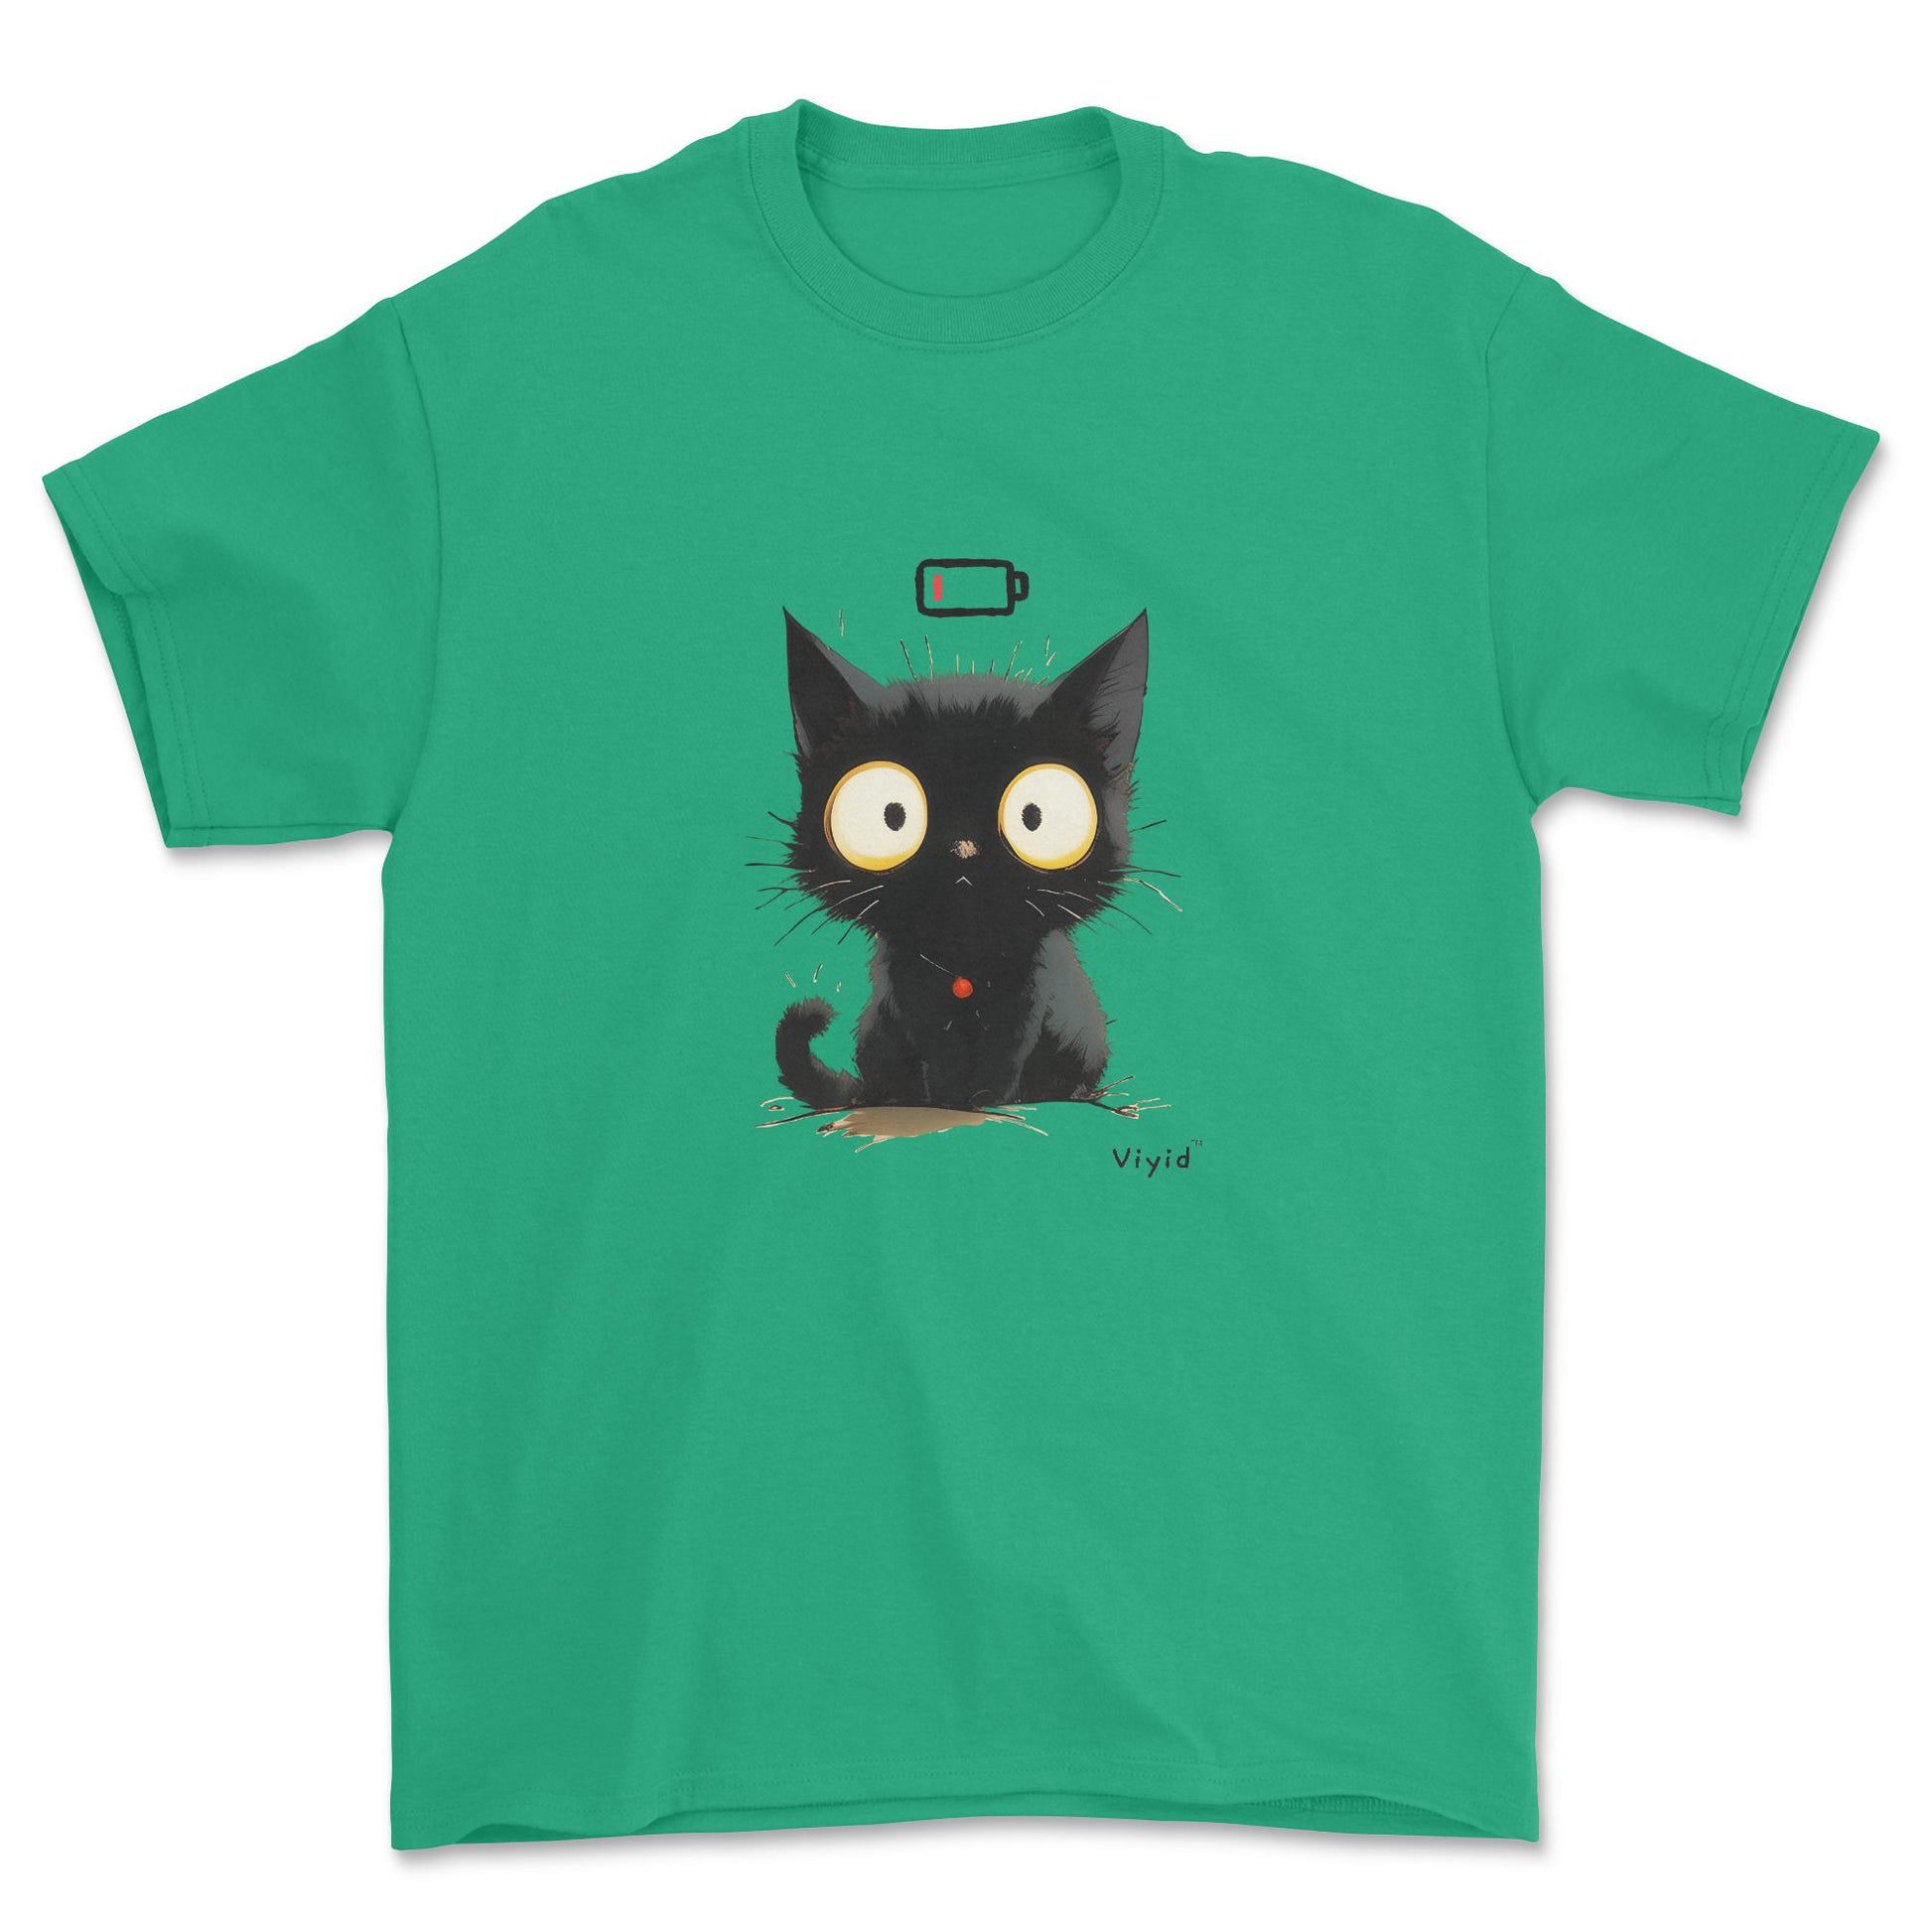 Low battery black cat adult t-shirt irish green